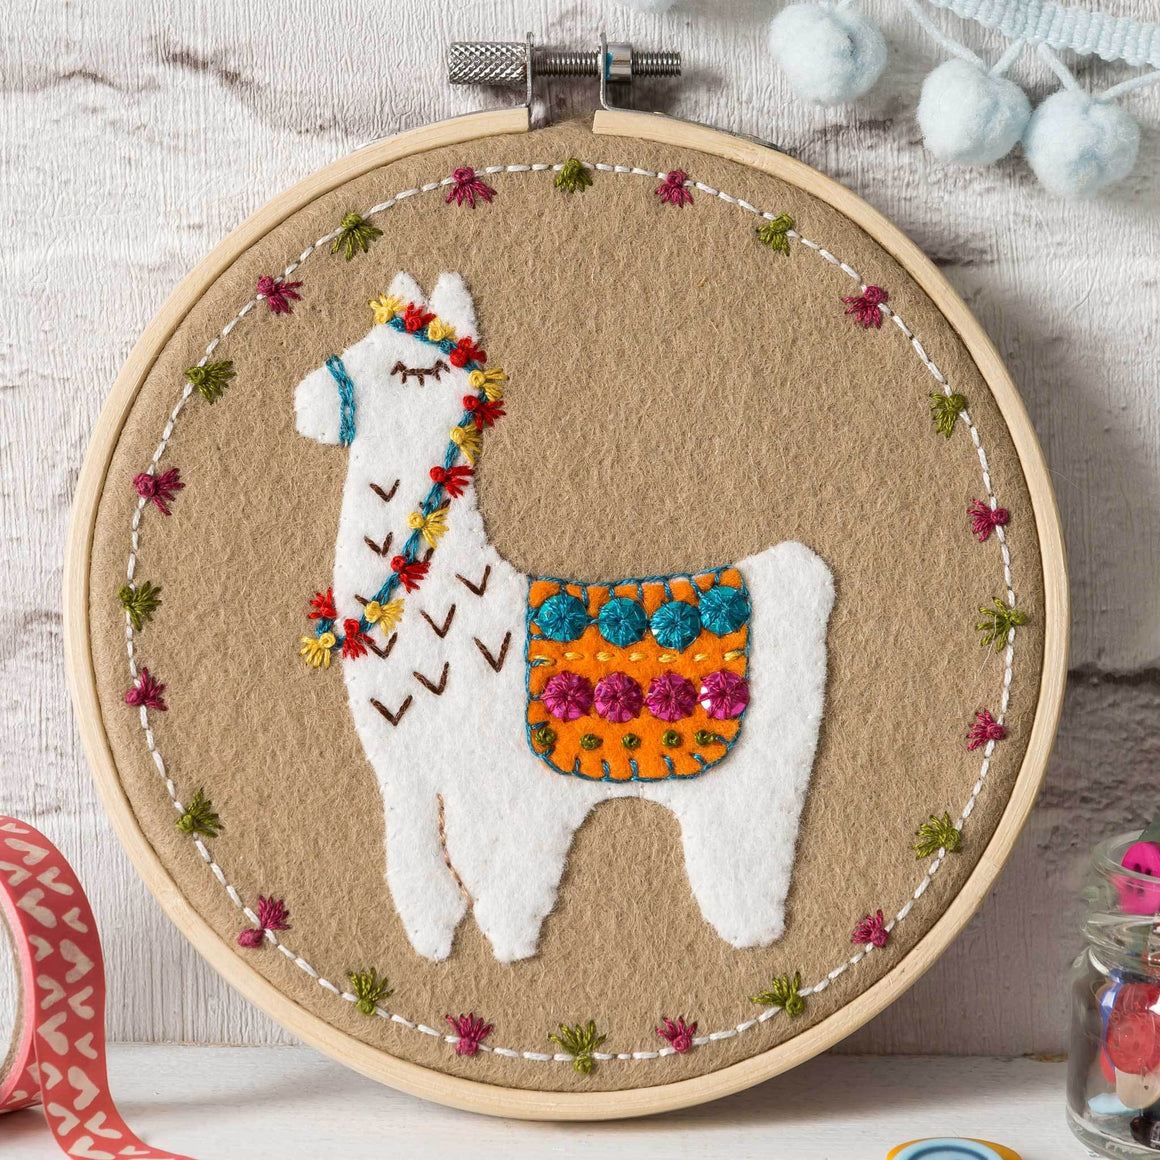 Corinne Lapierre applique hoop felt Llama craft kit. White felt Llama set in a wooden embroidery hoop.